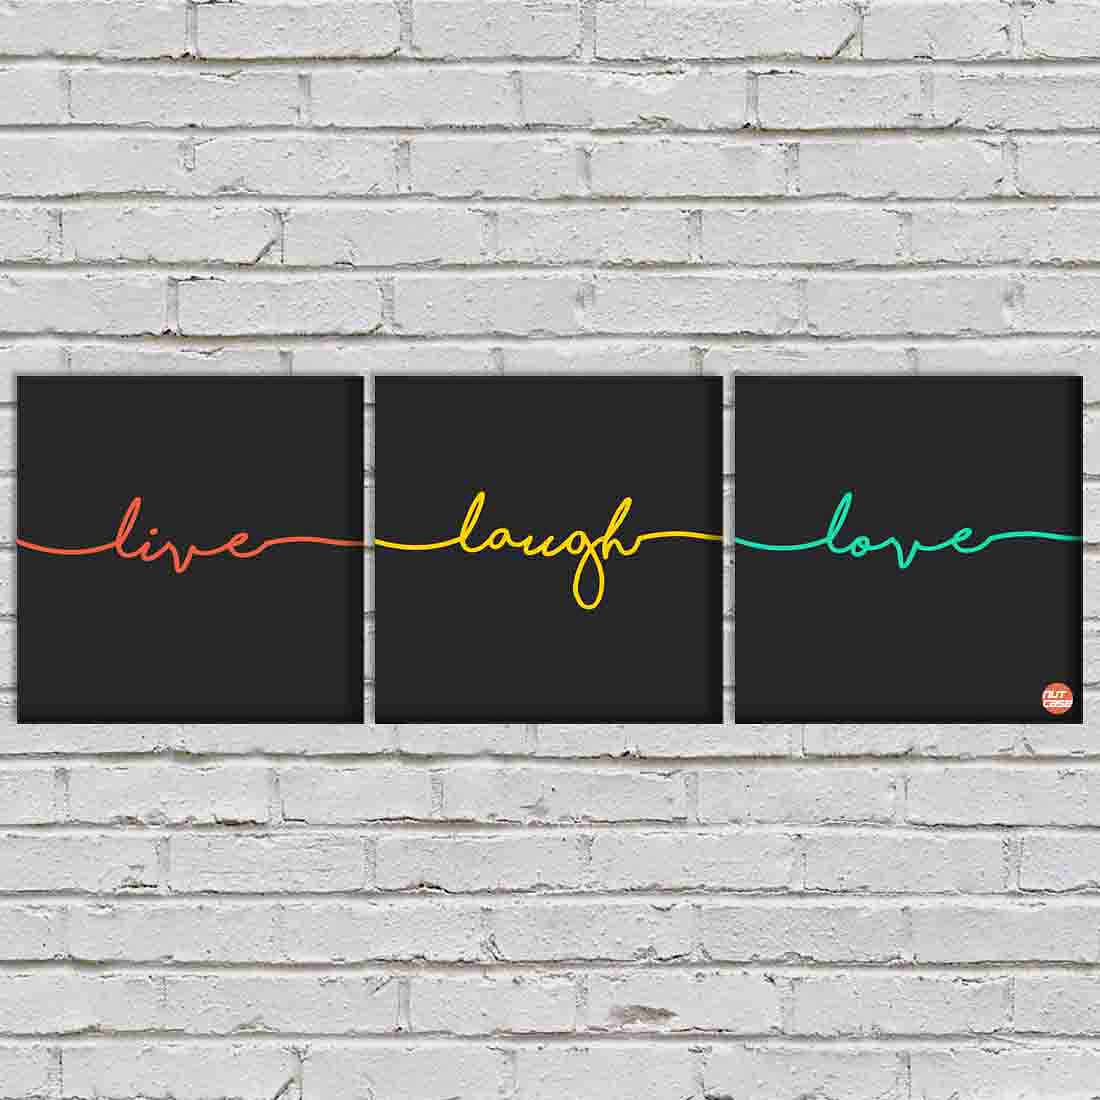 Wall Art Decor Hanging Panels Set Of 3 -Live Laugh Love Nutcase